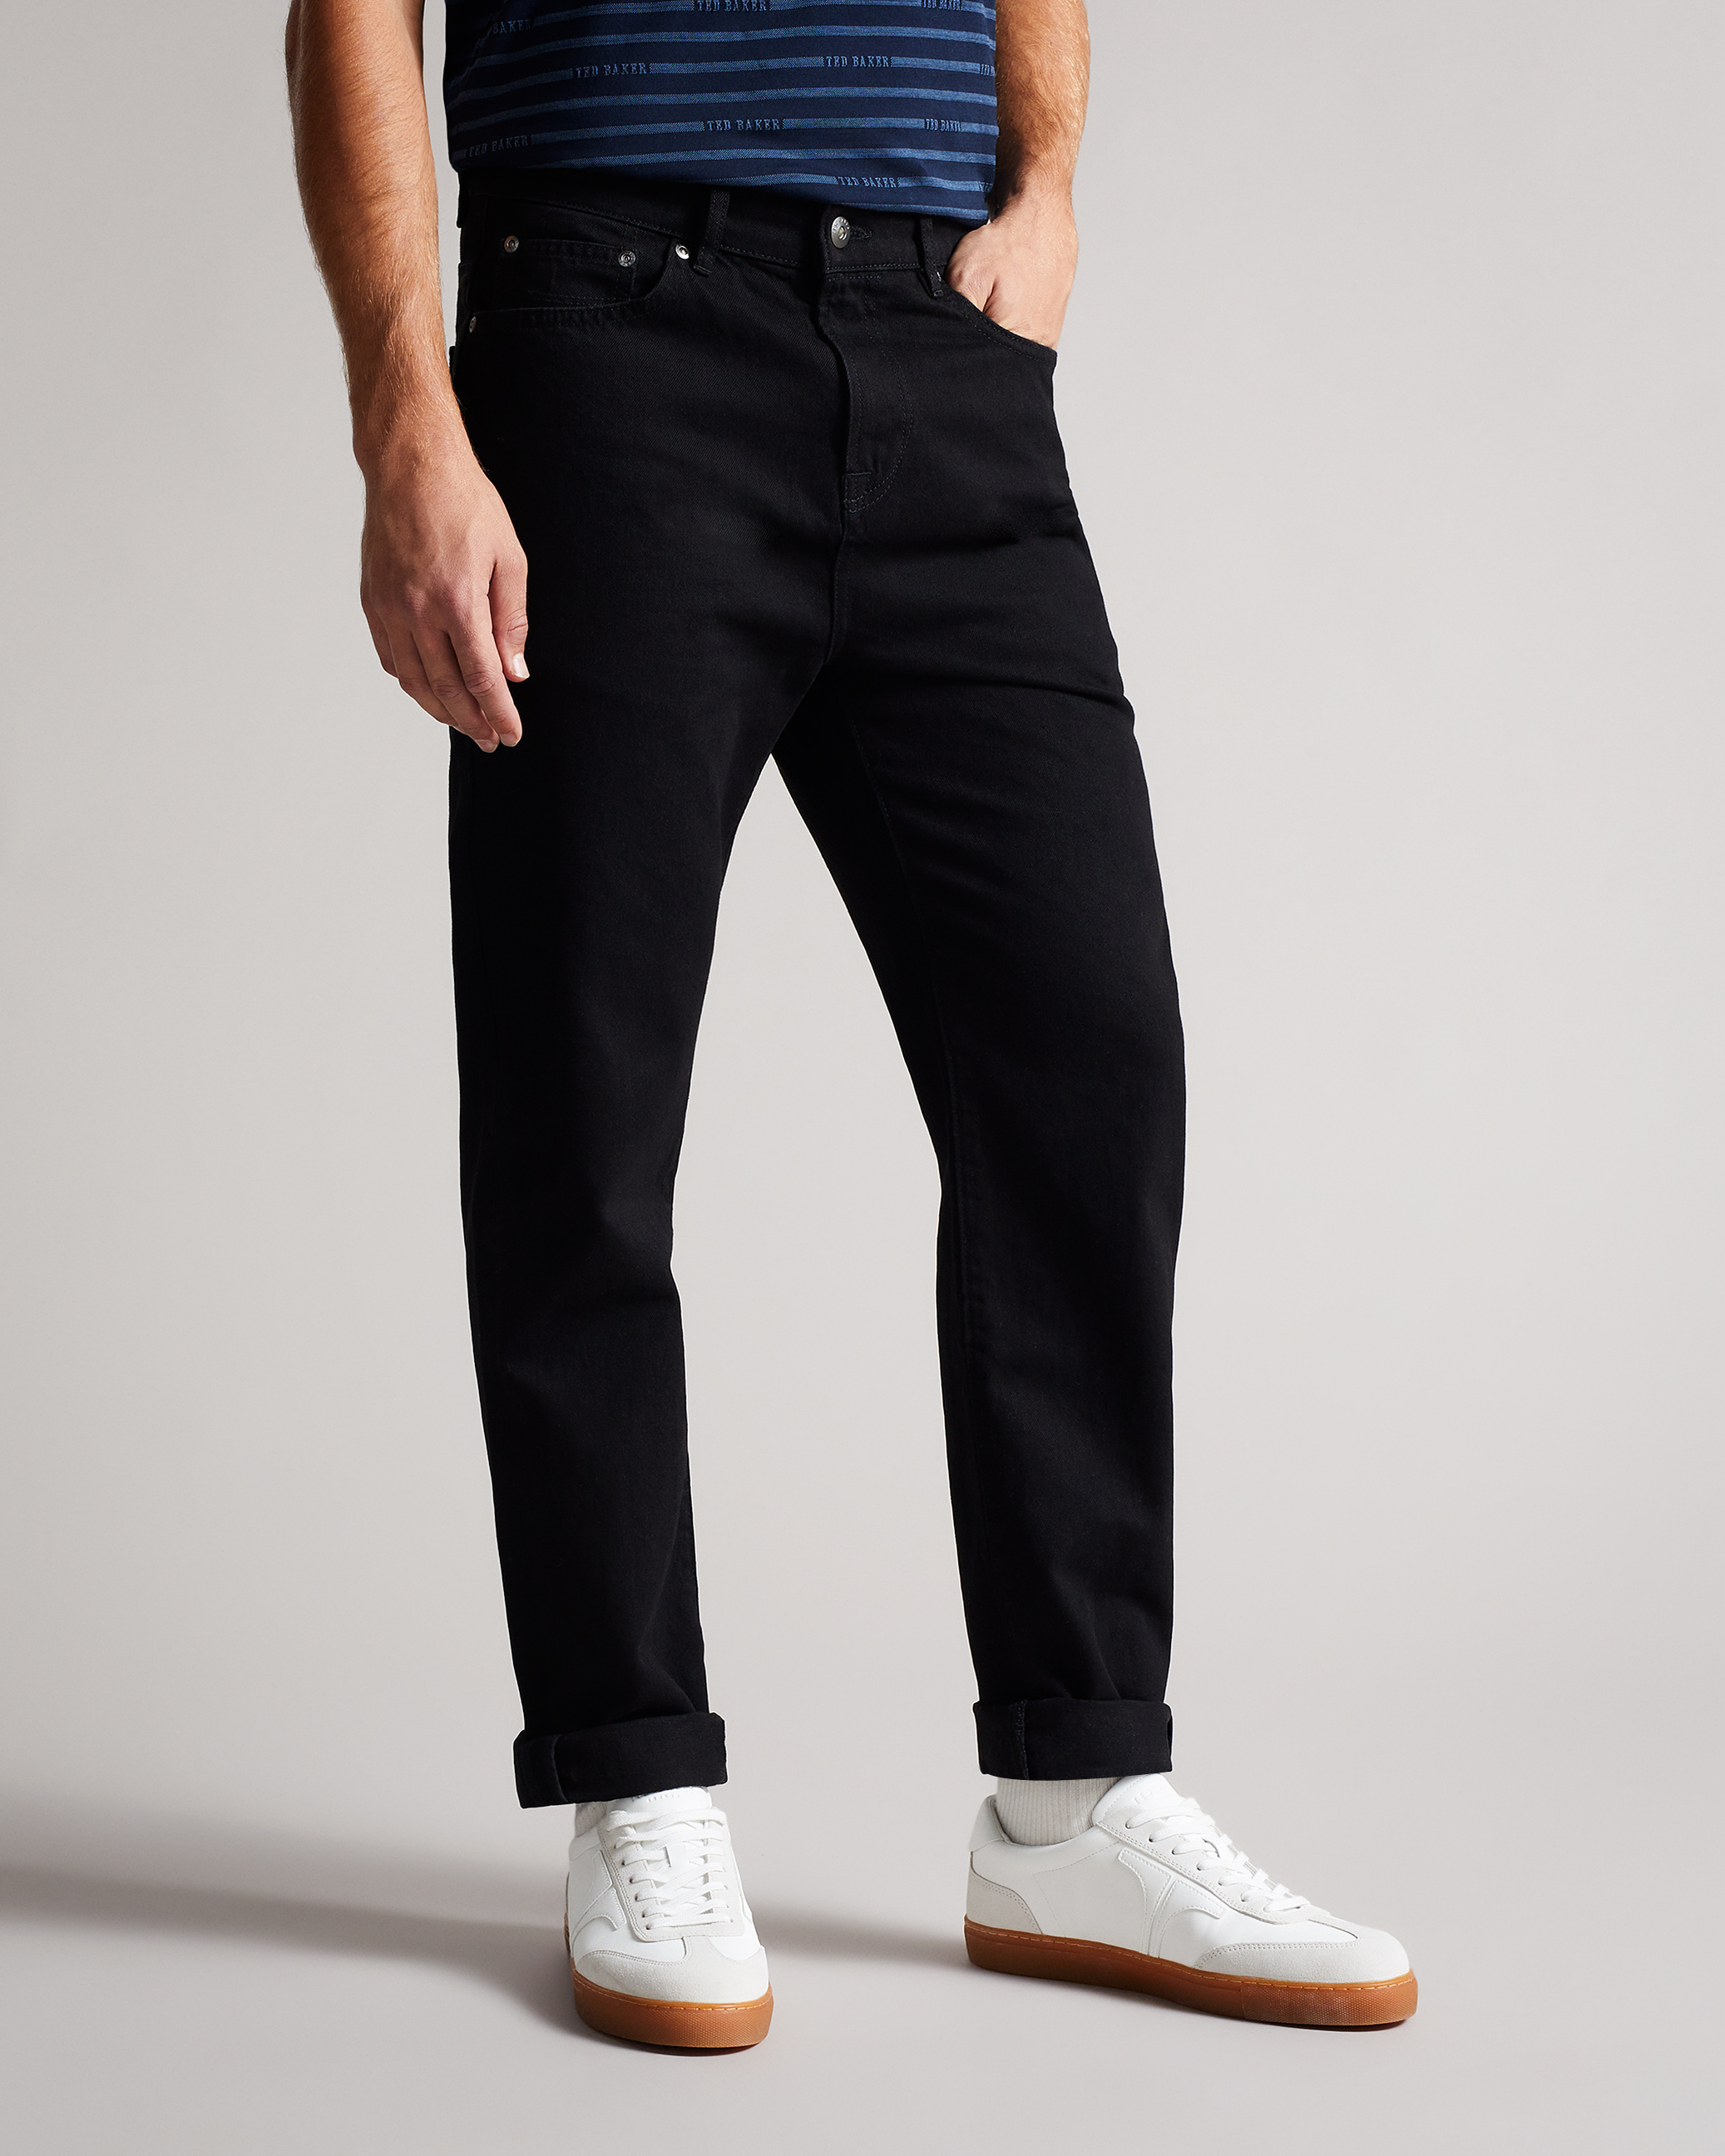 Men's Trousers, Men's Designer Trousers